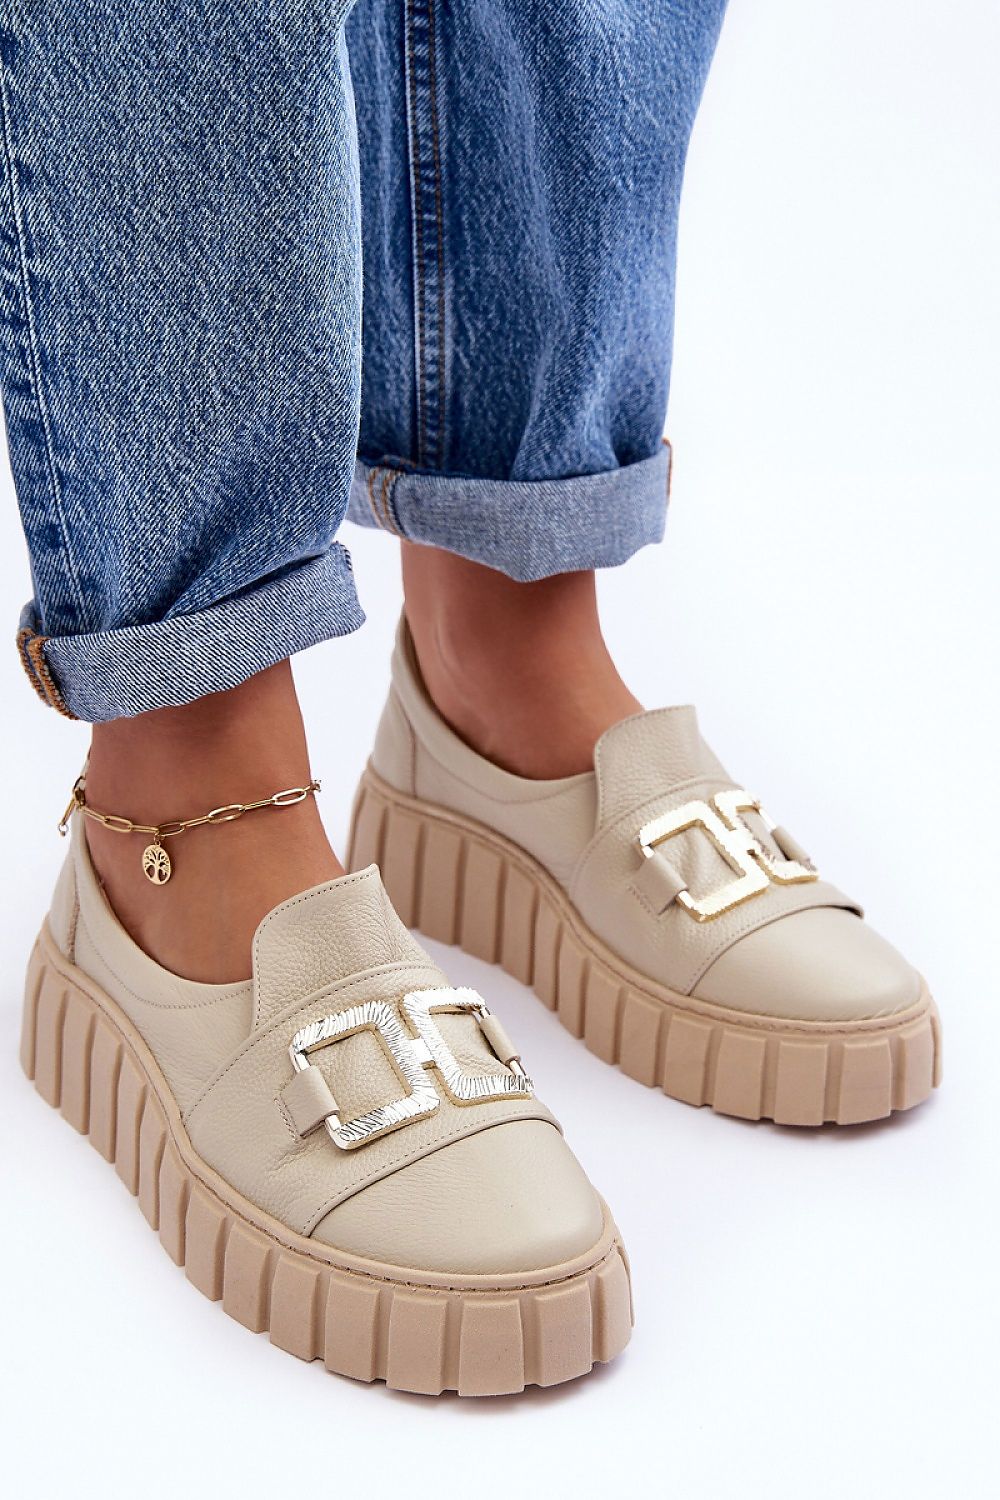 TEEK - Link Textured Platform Textured Loafer Shoes SHOES TEEK MH   